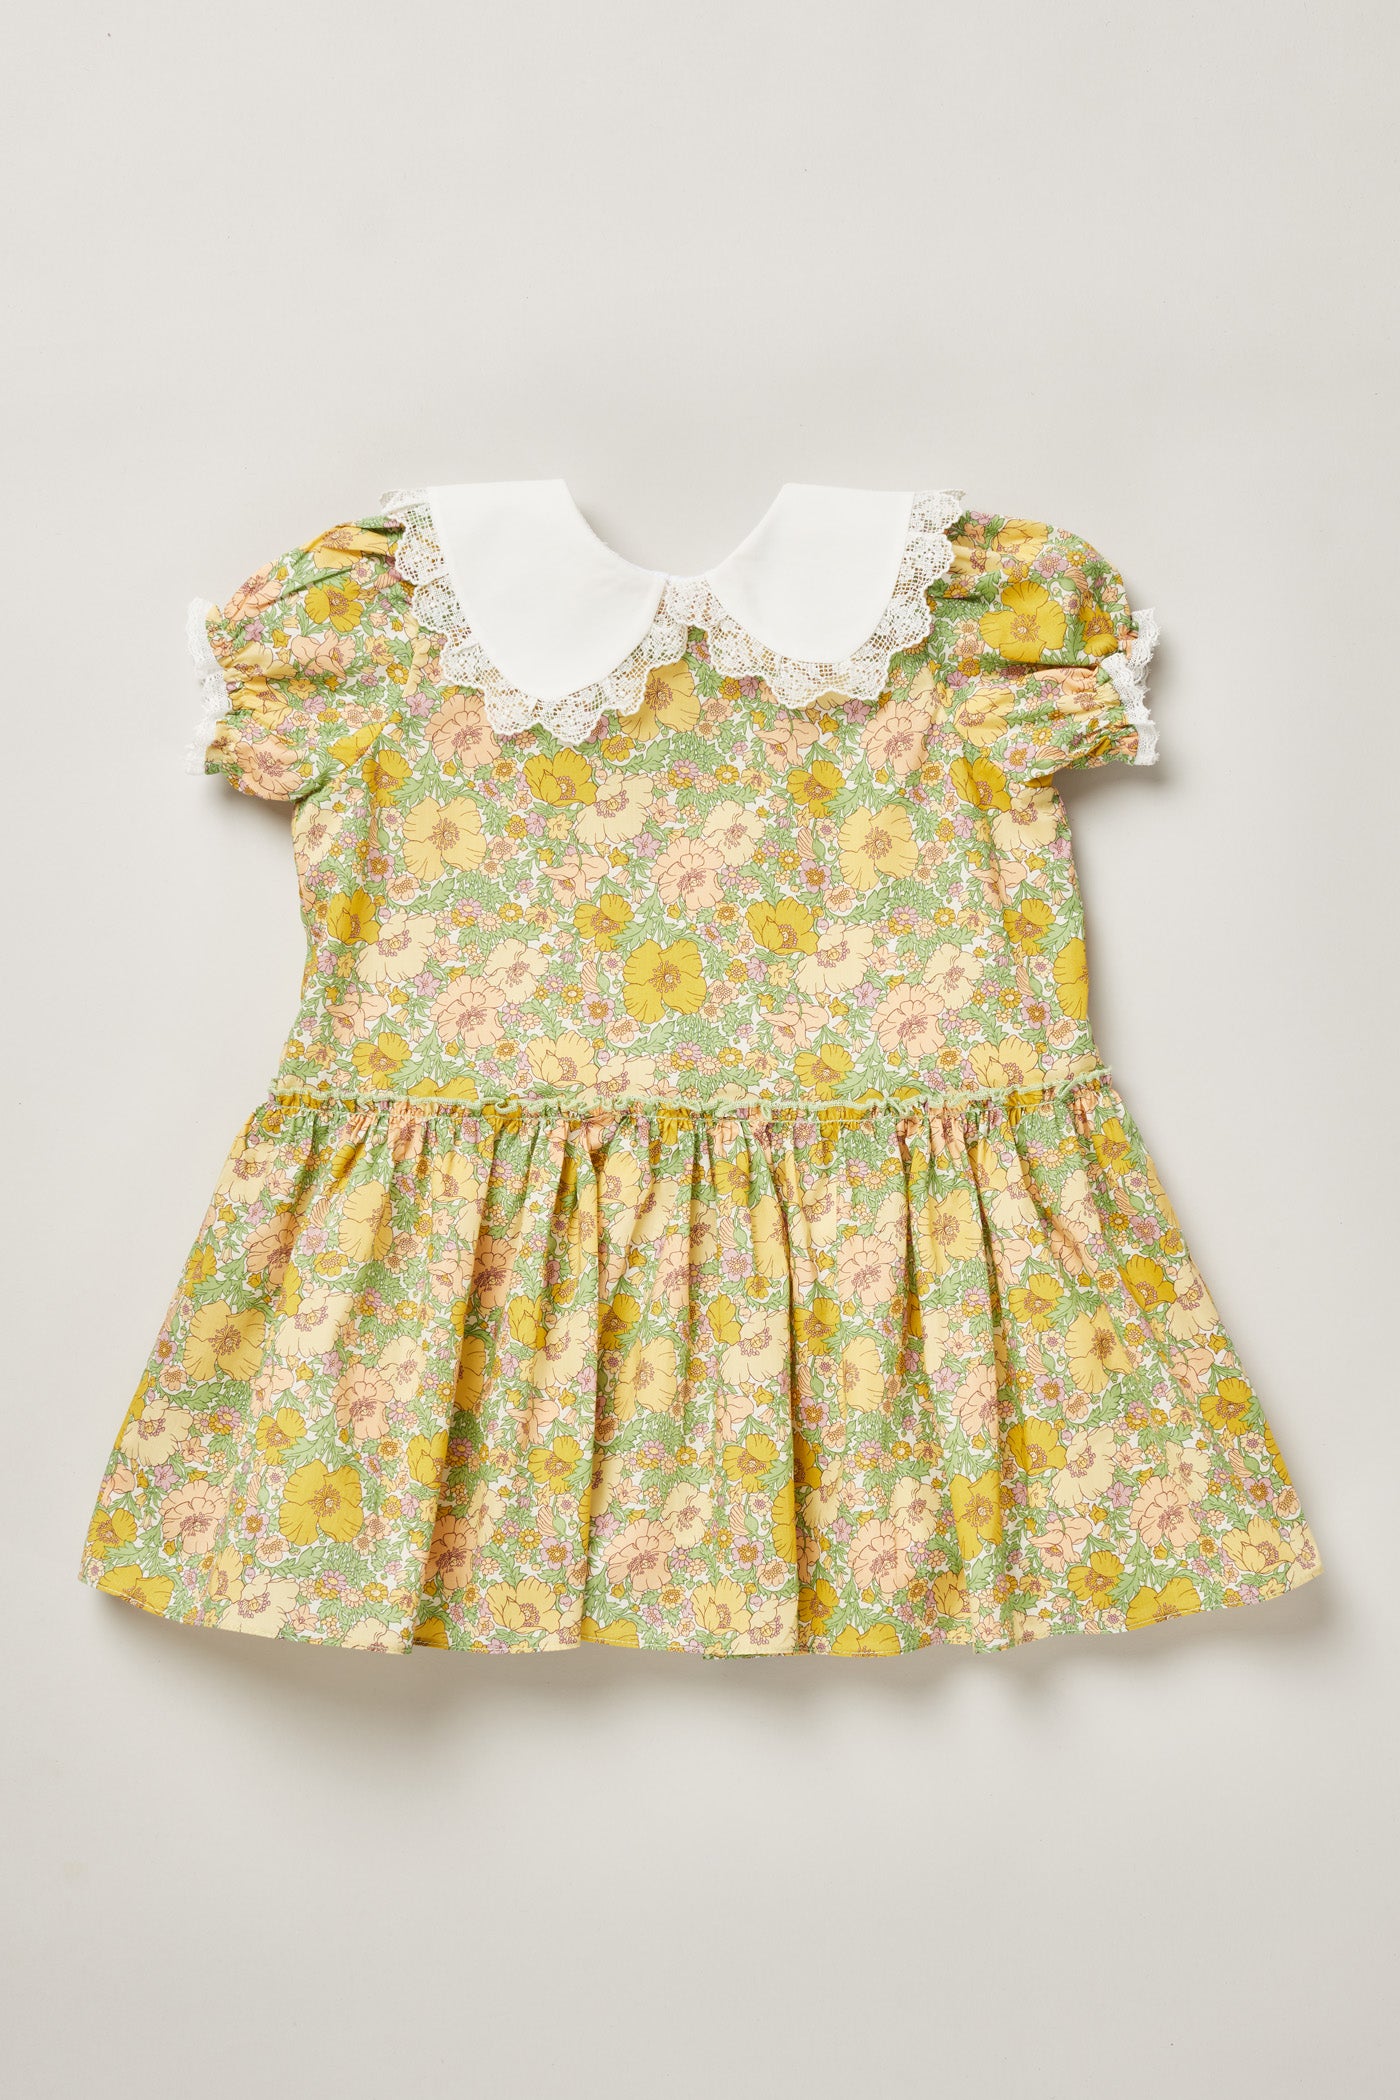 Baby Jane Dress in California Poppy